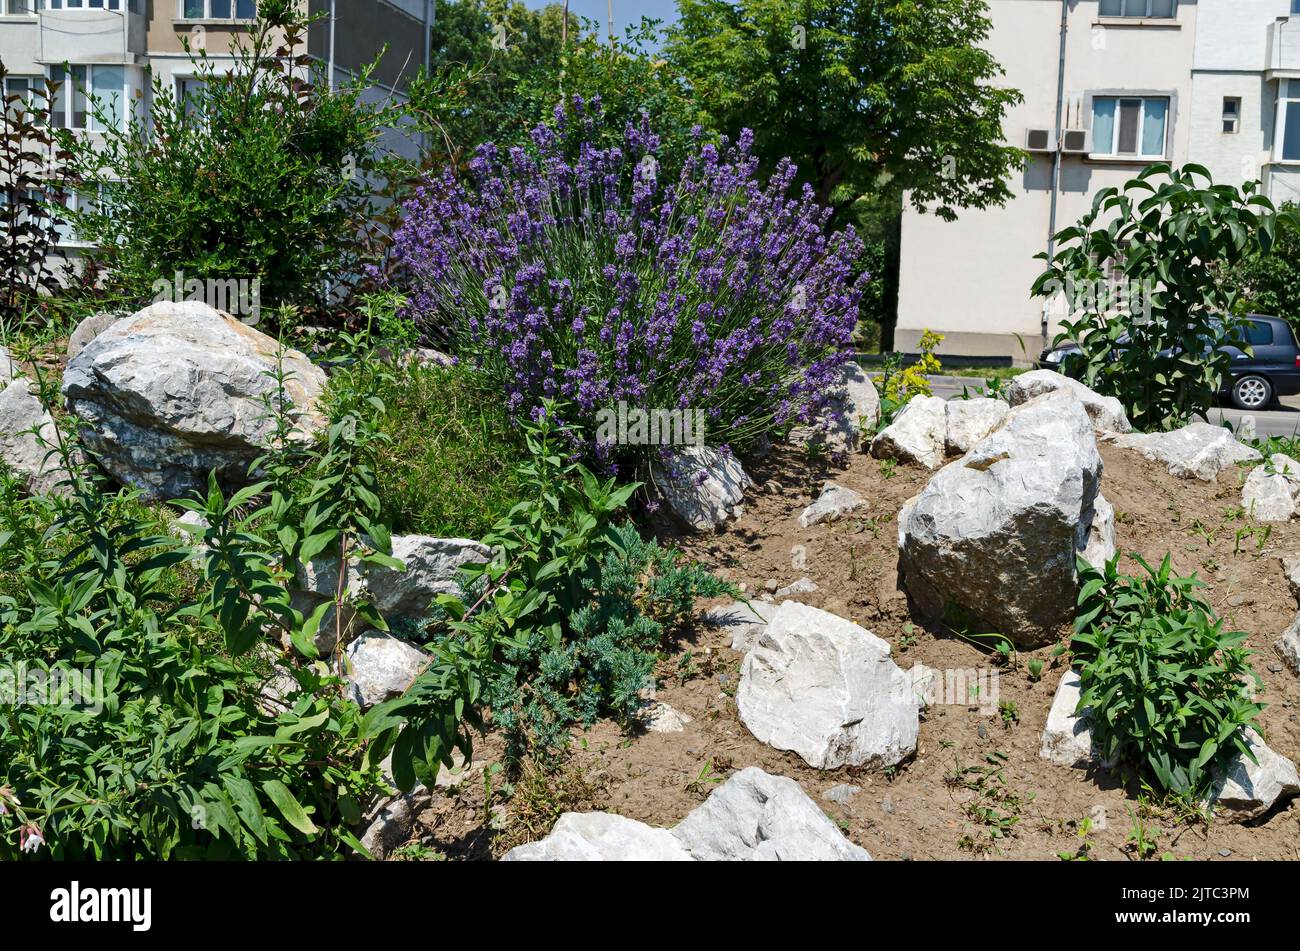 Fresh flowering lavender in the rockery garden with perennial plants, Sofia, Bulgaria Stock Photo